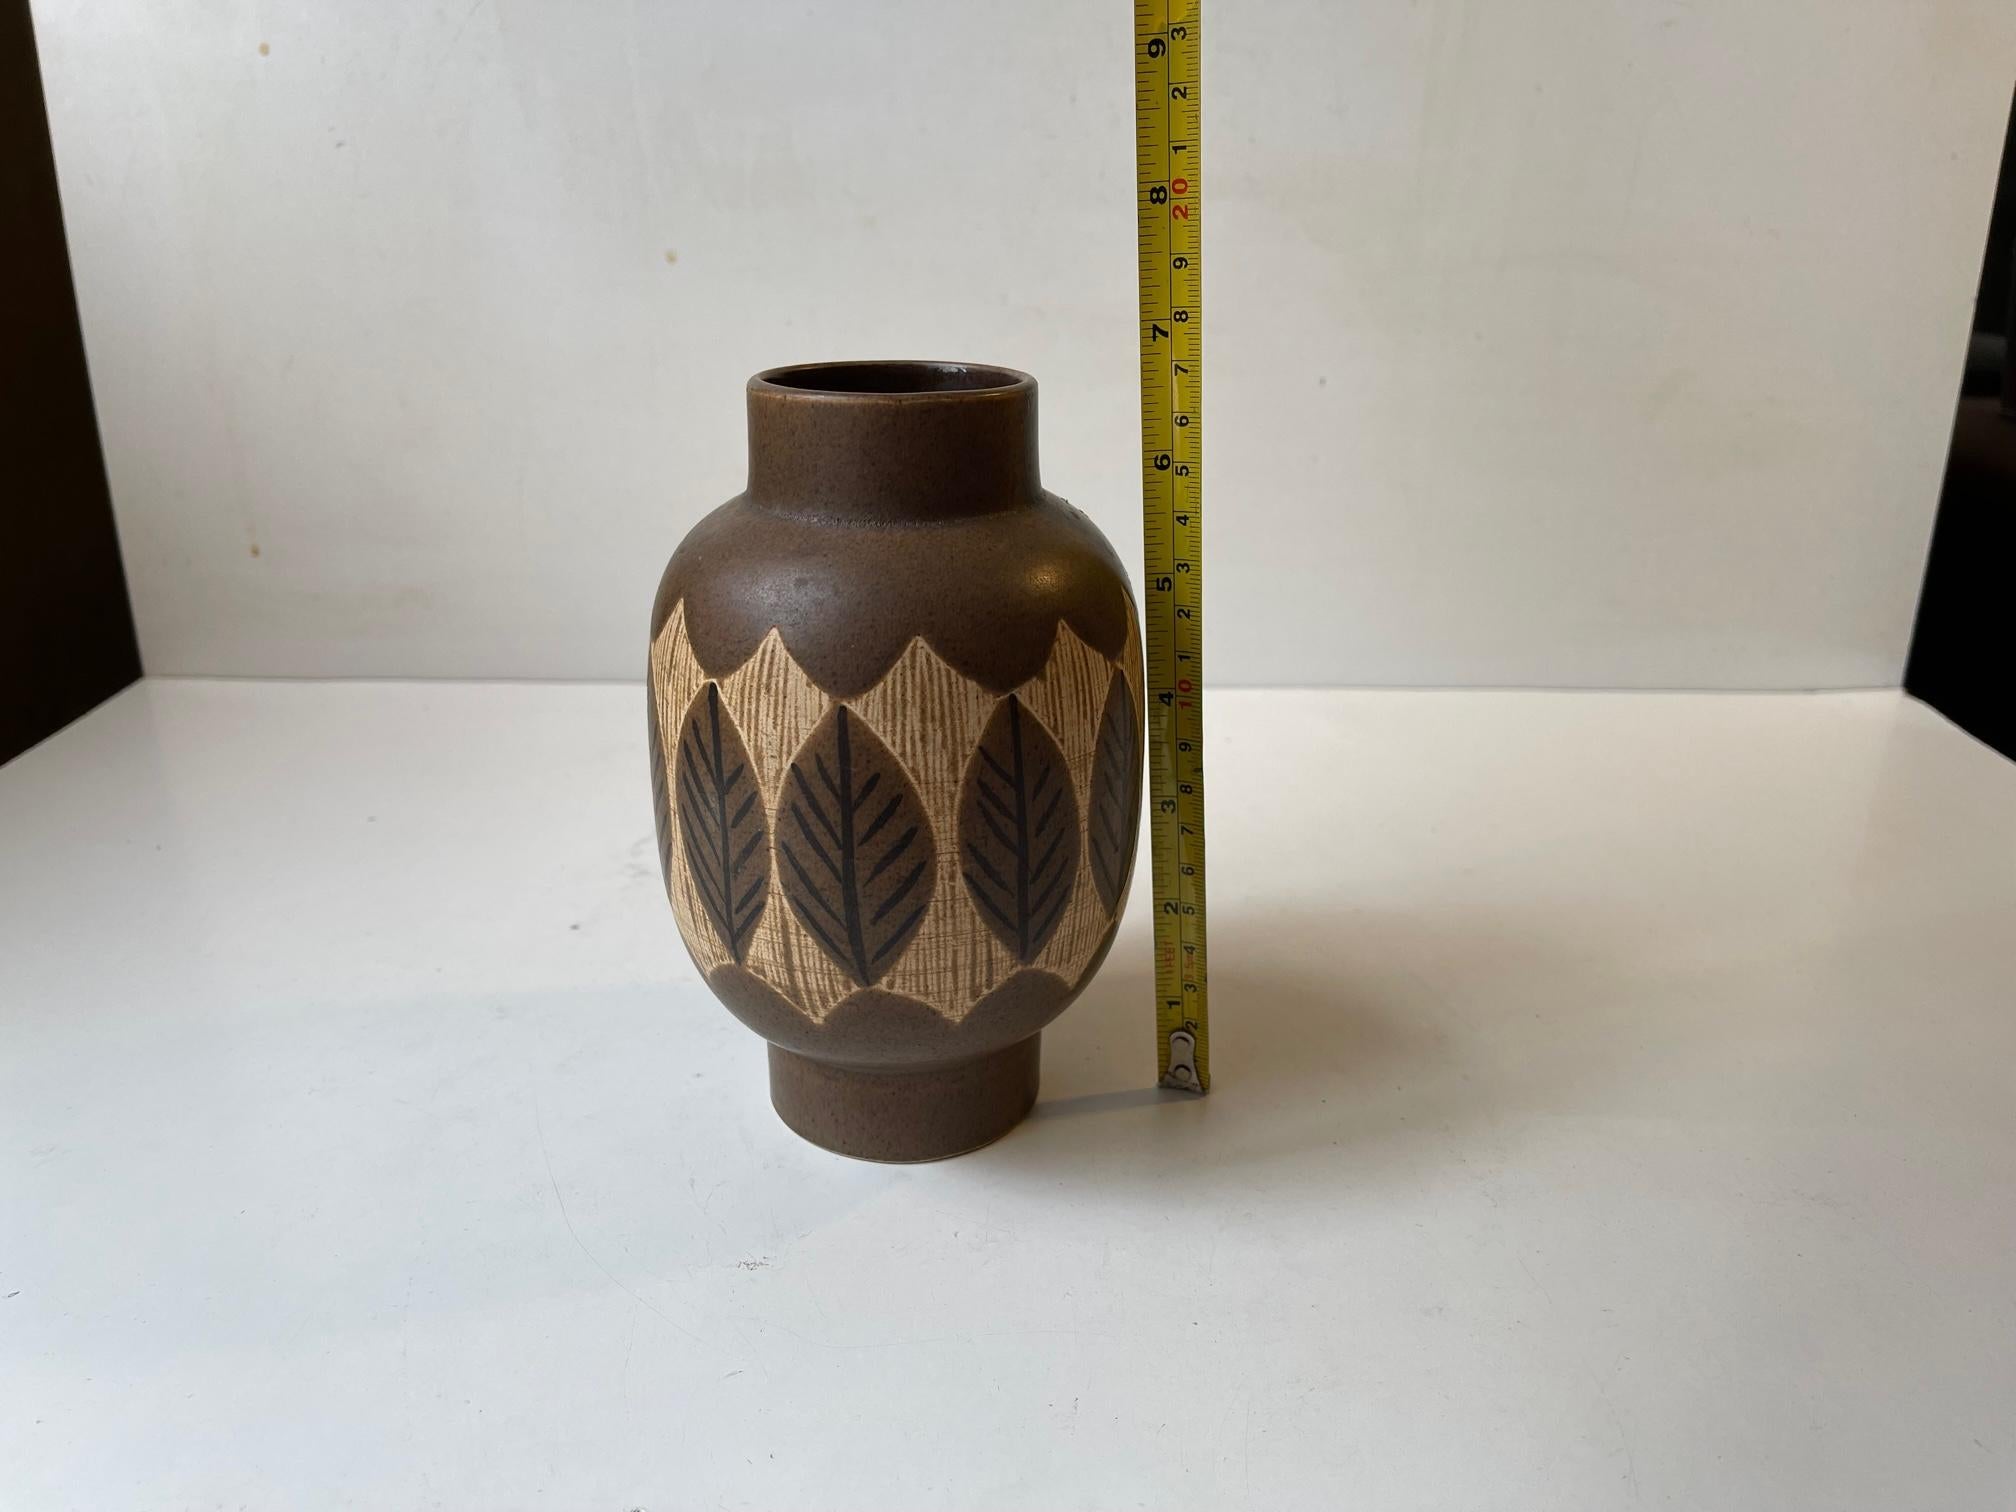 Glazed Jacob Siv Ceramic Vase with Leaves for Syco Sweden, 1970s For Sale